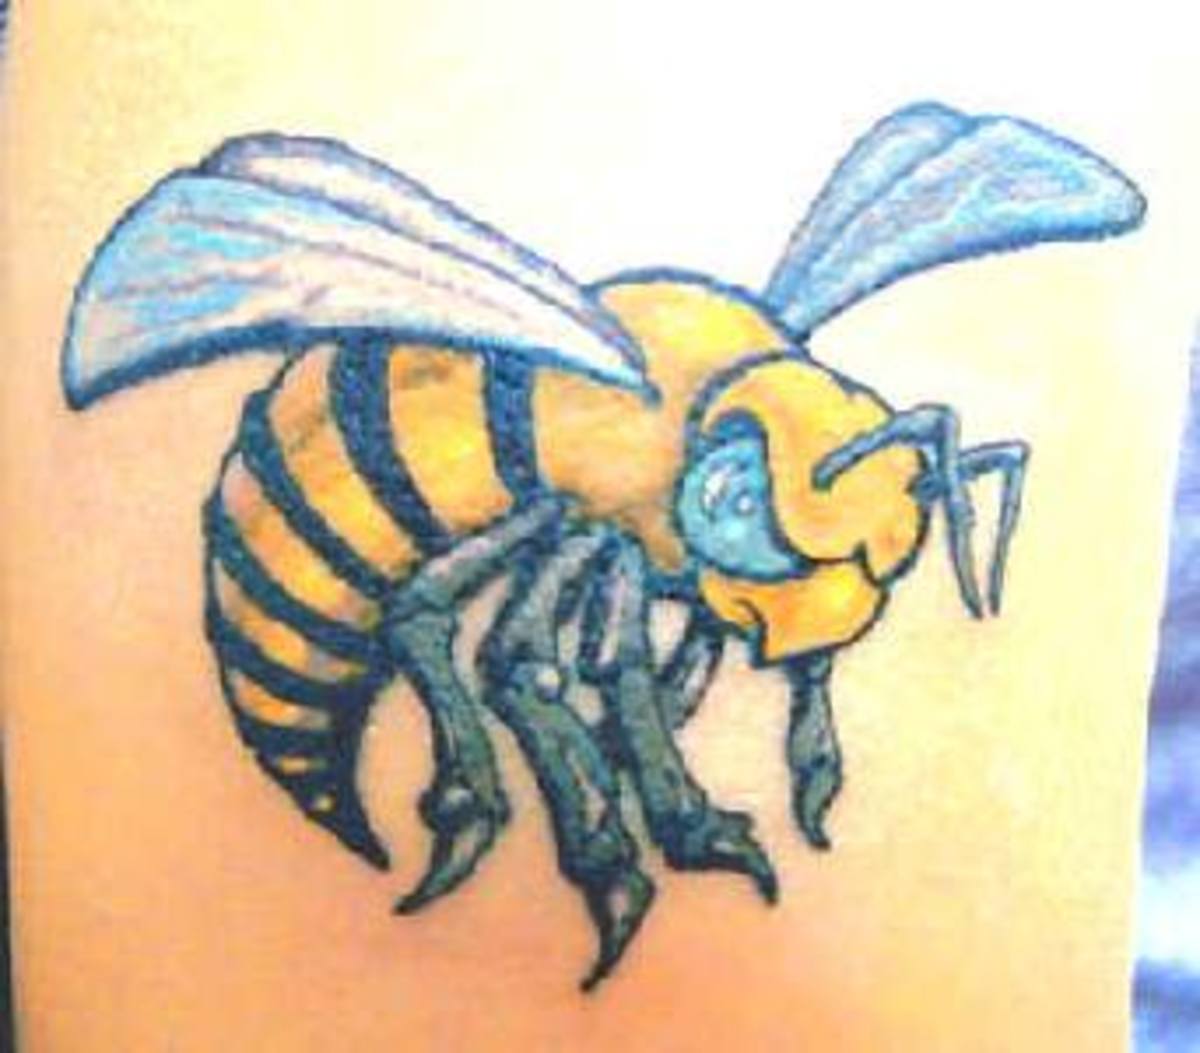 Bumblebee tattoo by kauniitaunia on DeviantArt